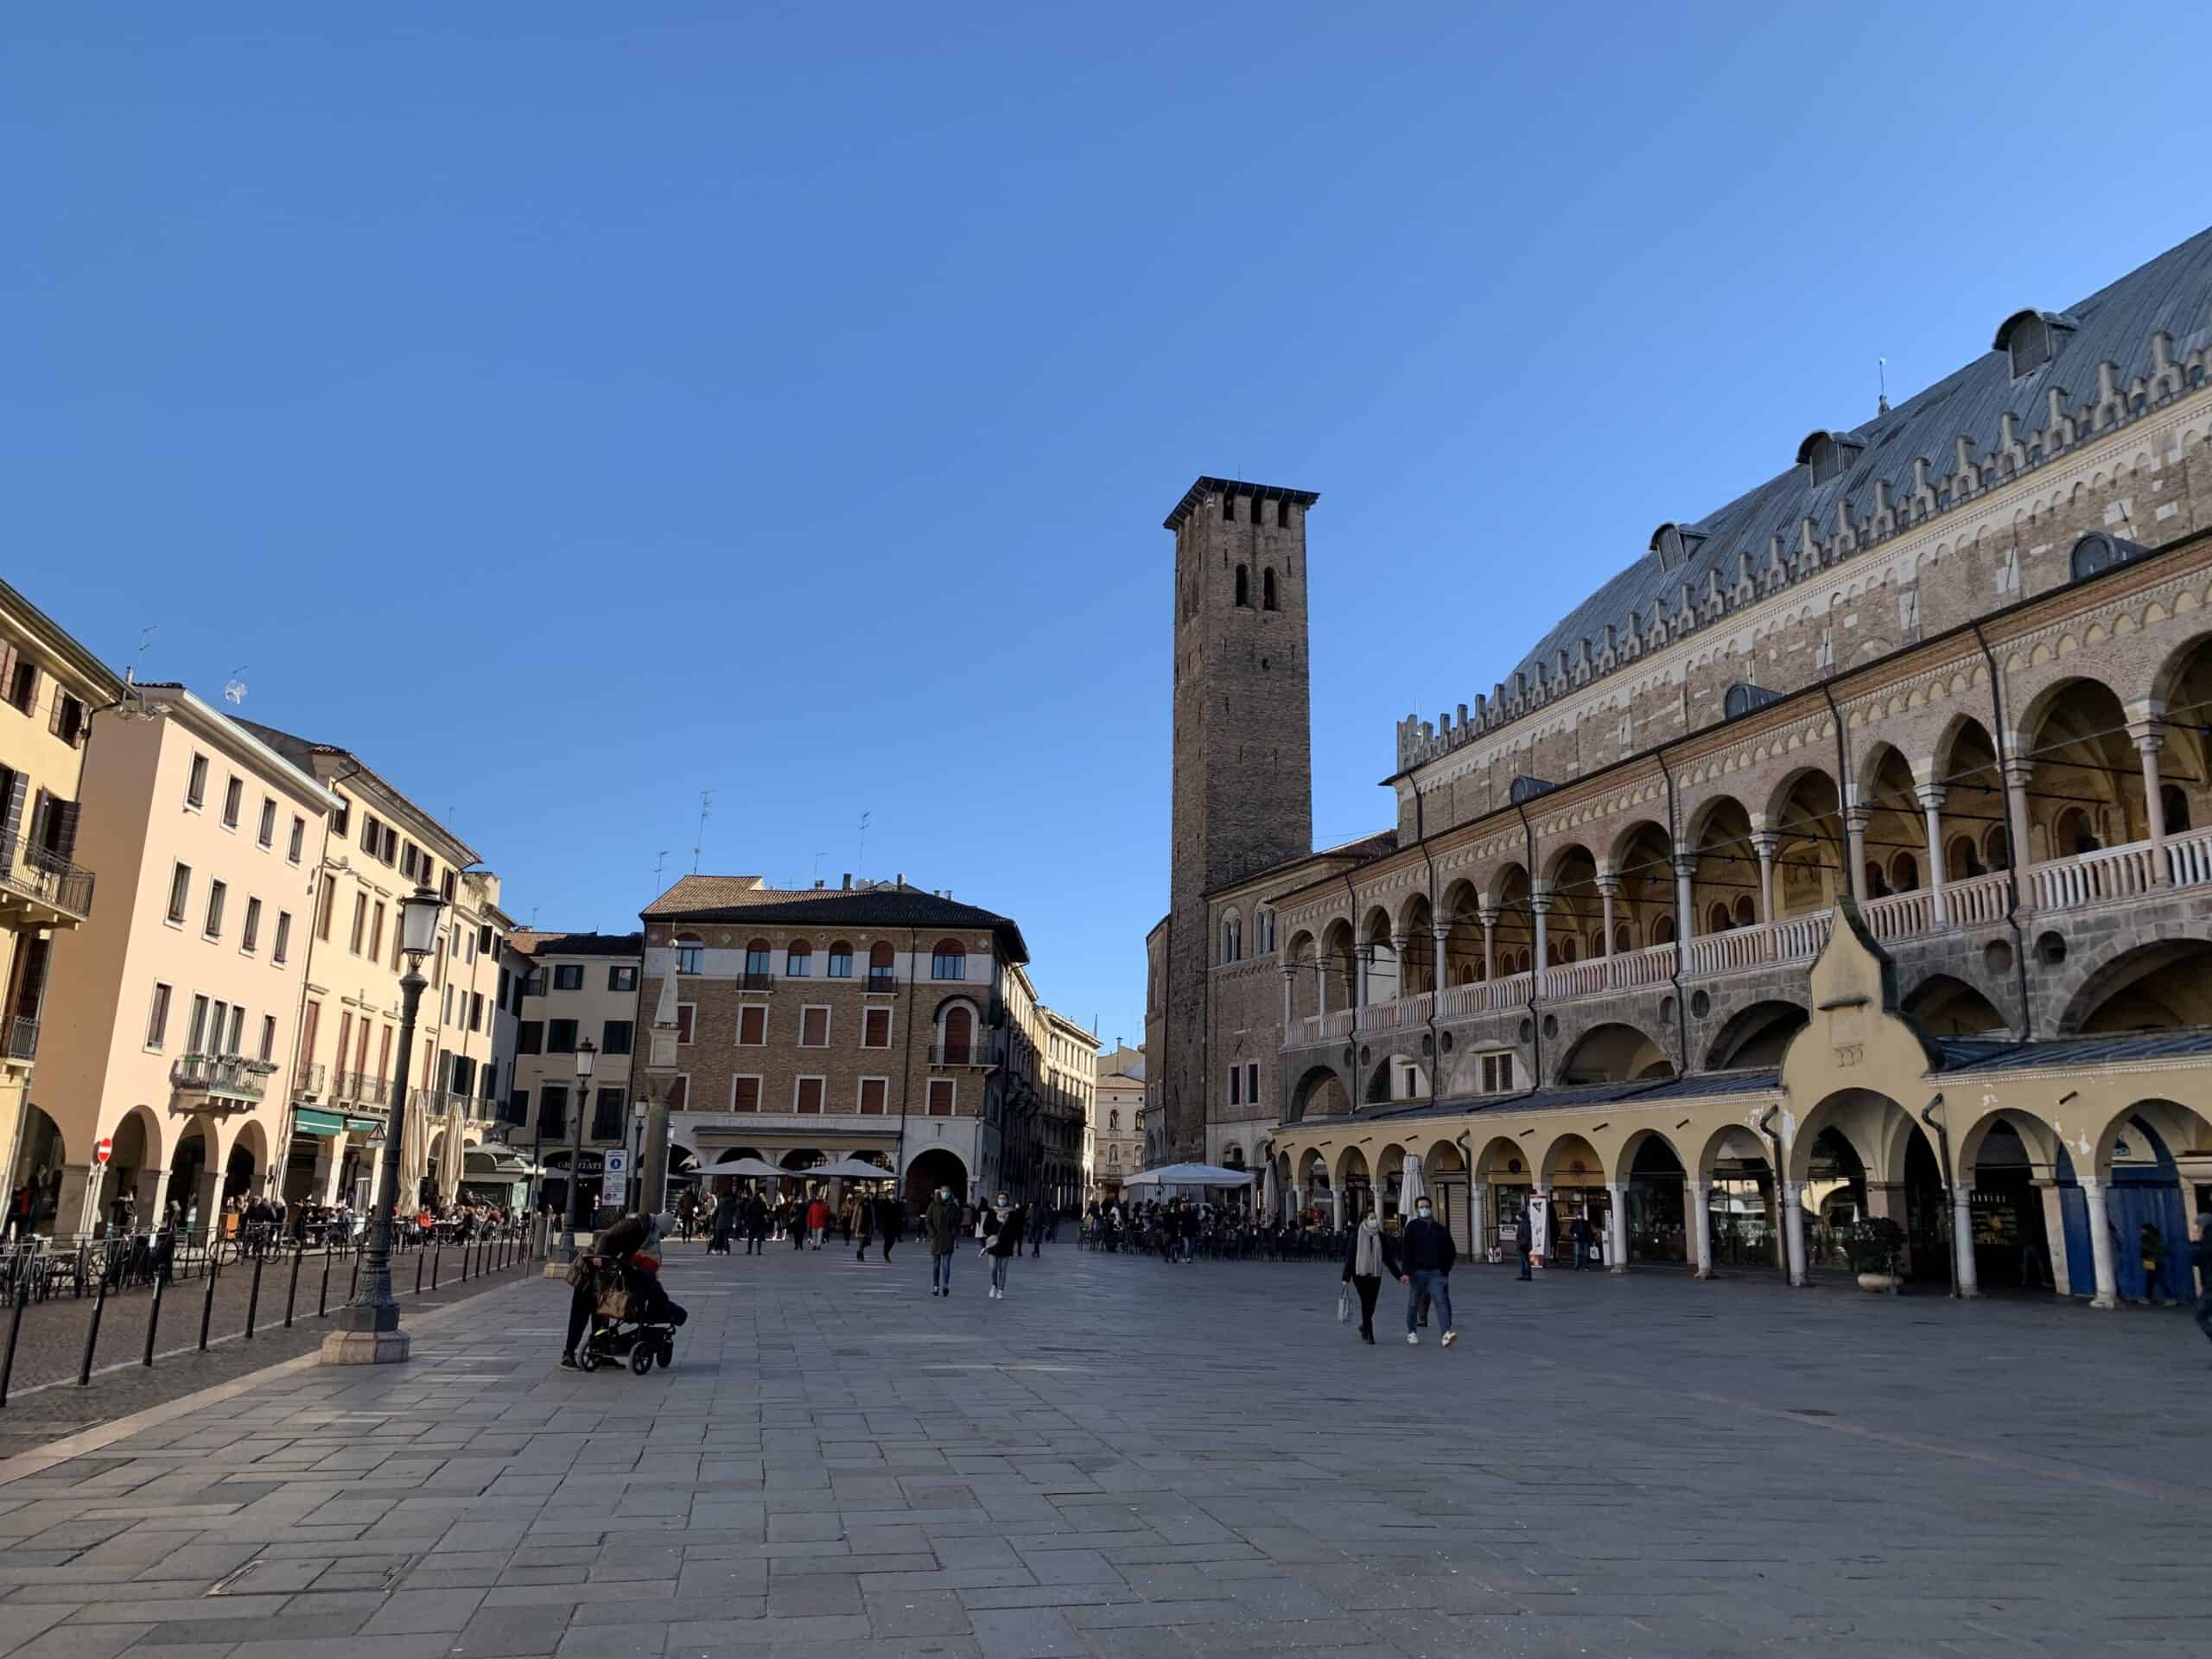 The main squares of Padua